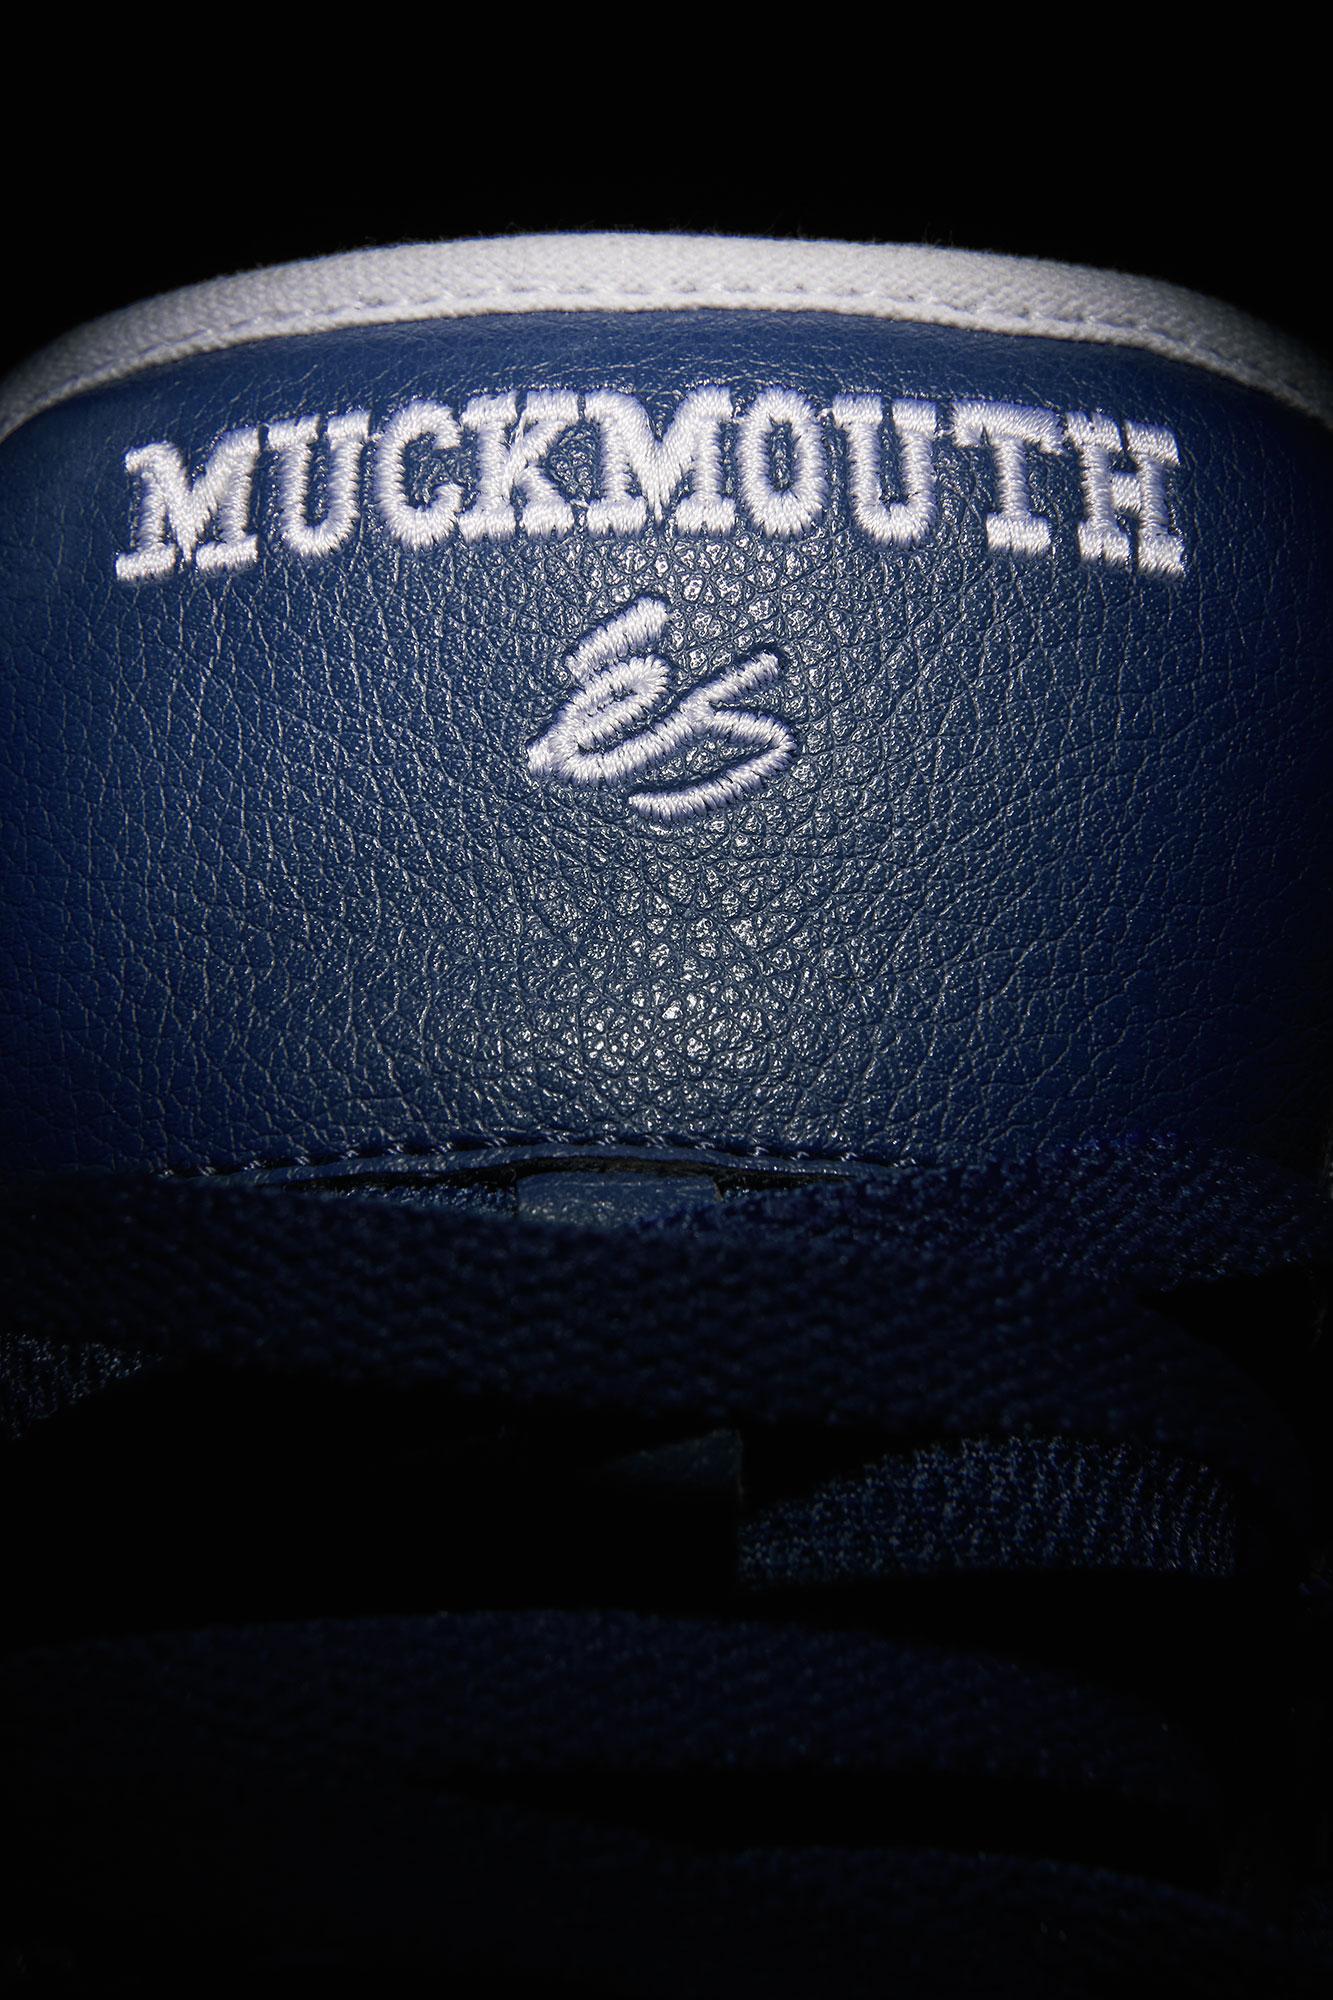 Muckmouth x éS collection